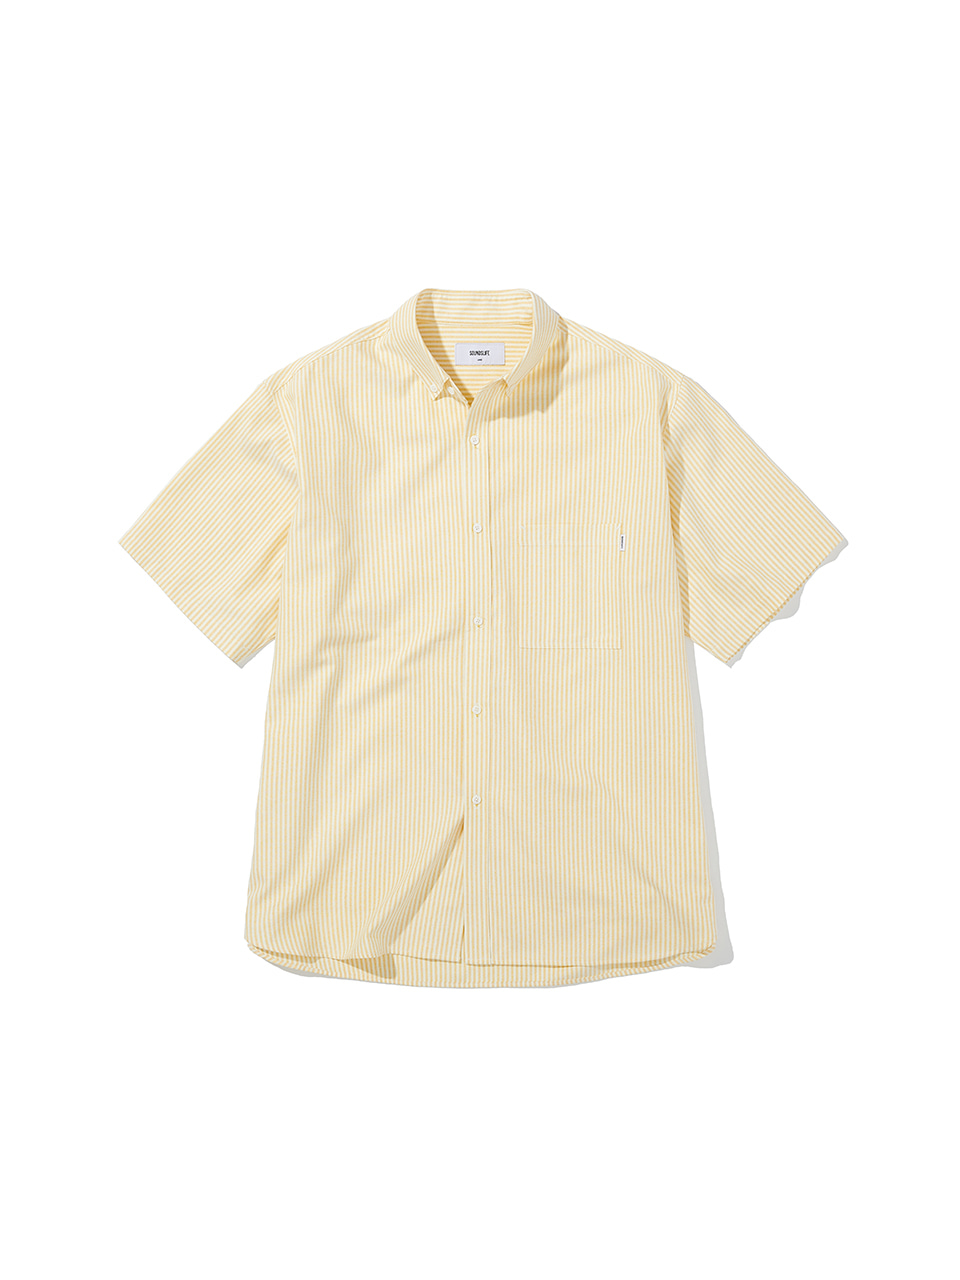 SOUNDSLIFE - Big fit Oxford Stripe Shirt Yellow